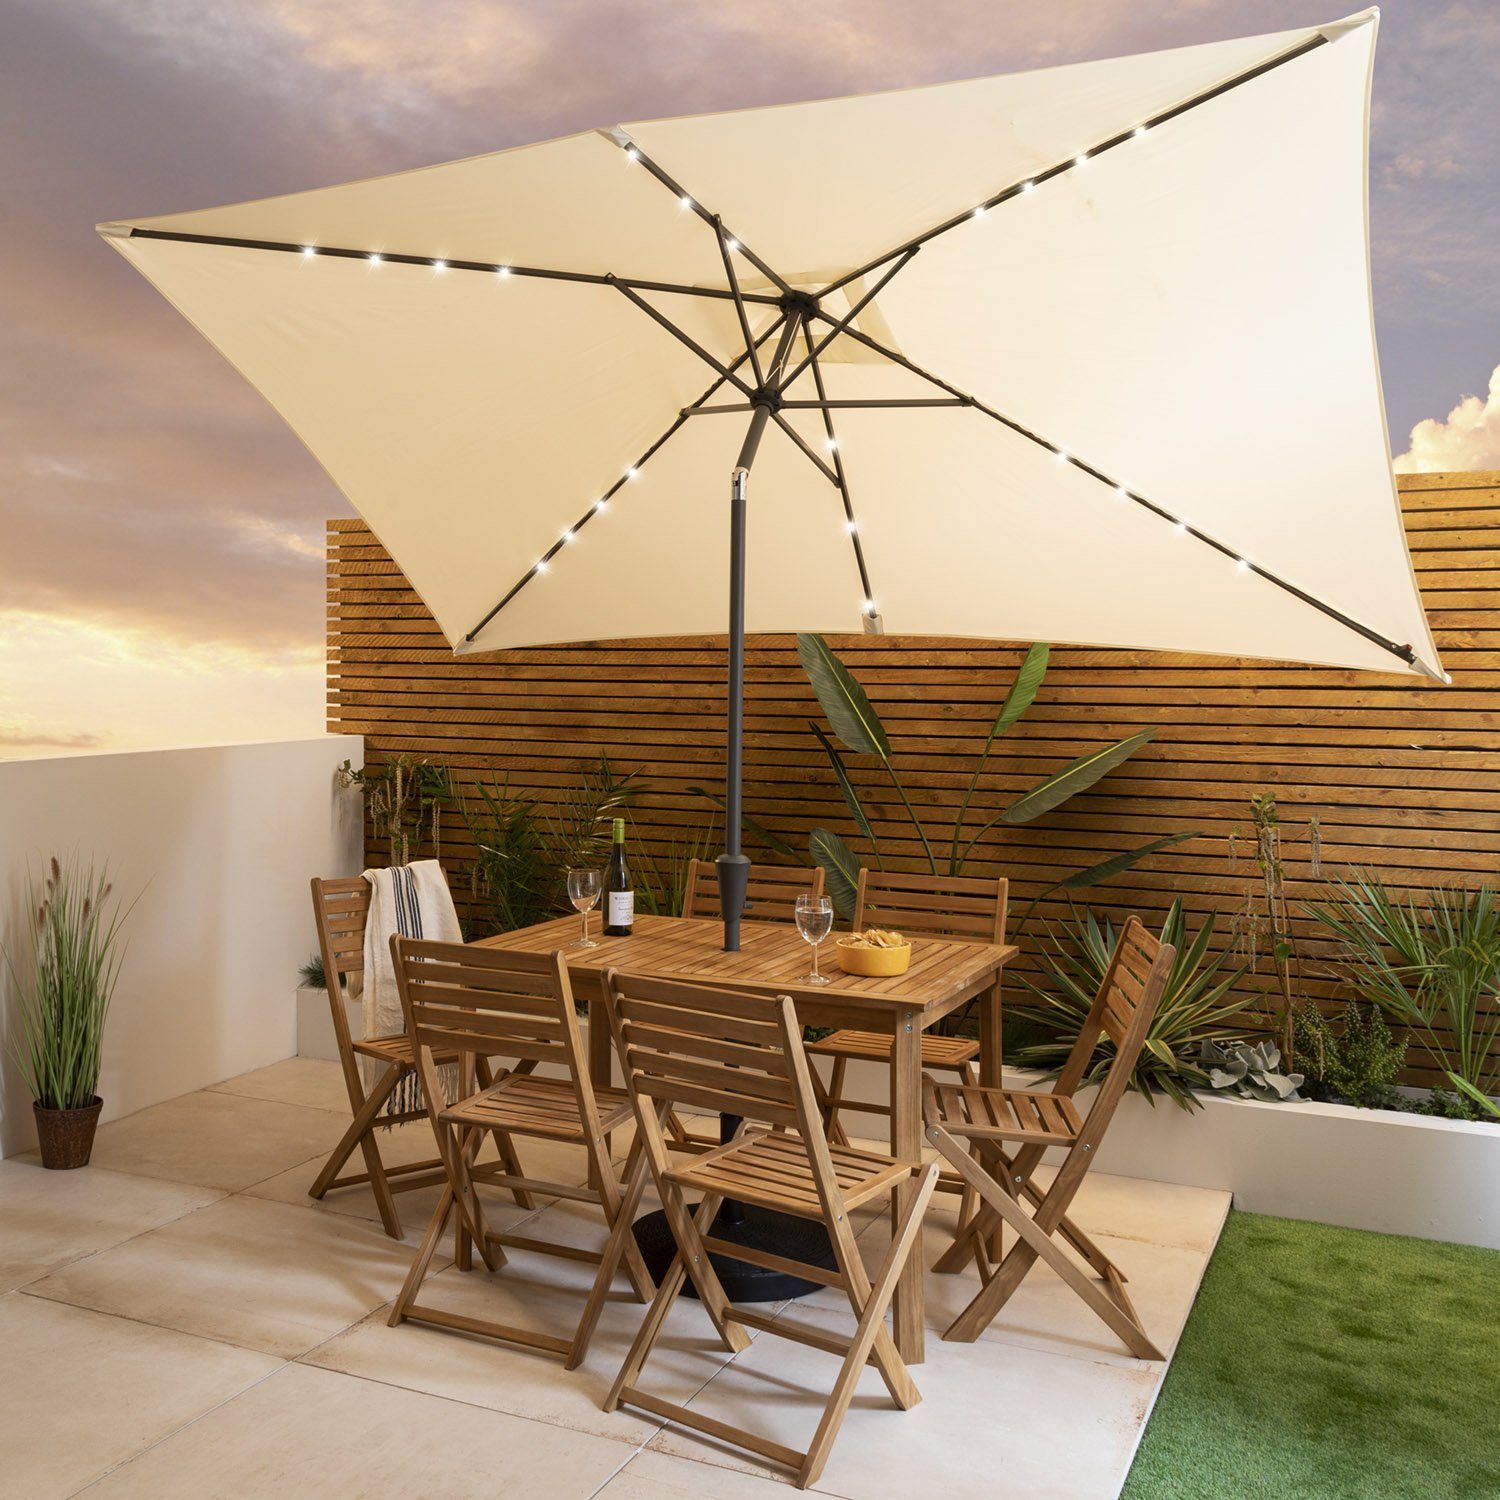 Ackley wooden garden furniture – 6 seater outdoor dining set with cream premium parasol